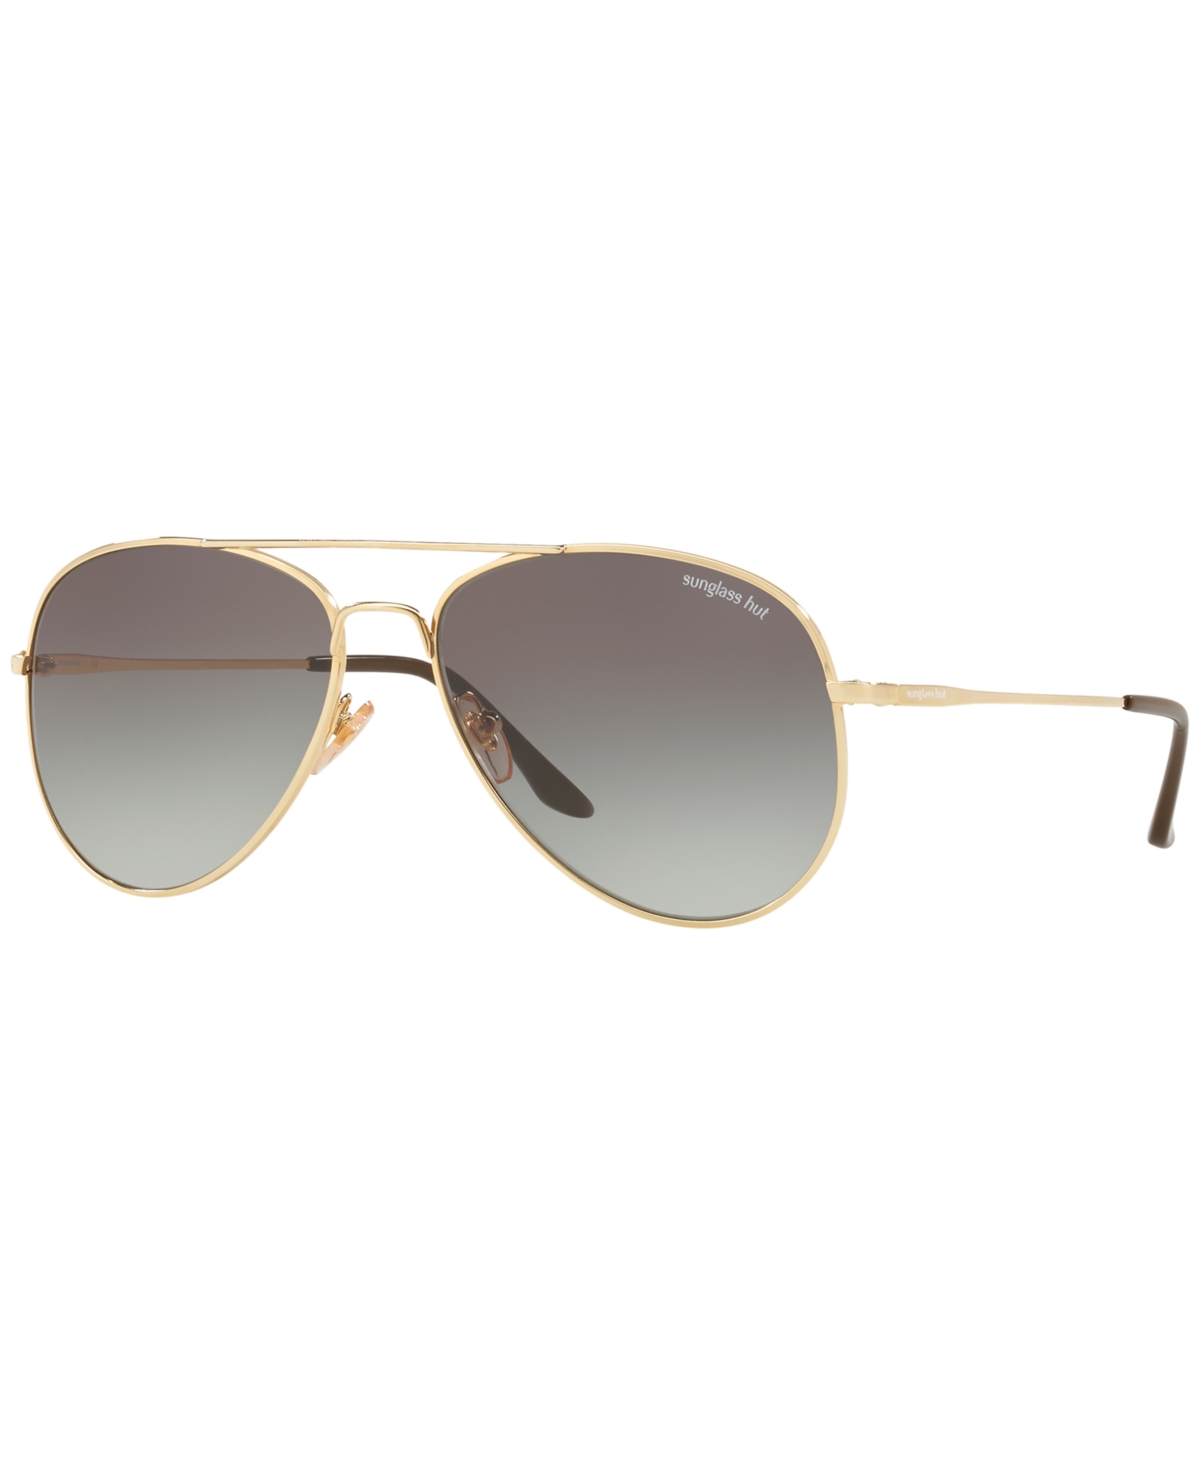 Sunglasses, HU1001 59 - GOLD/GREY GRADIENT